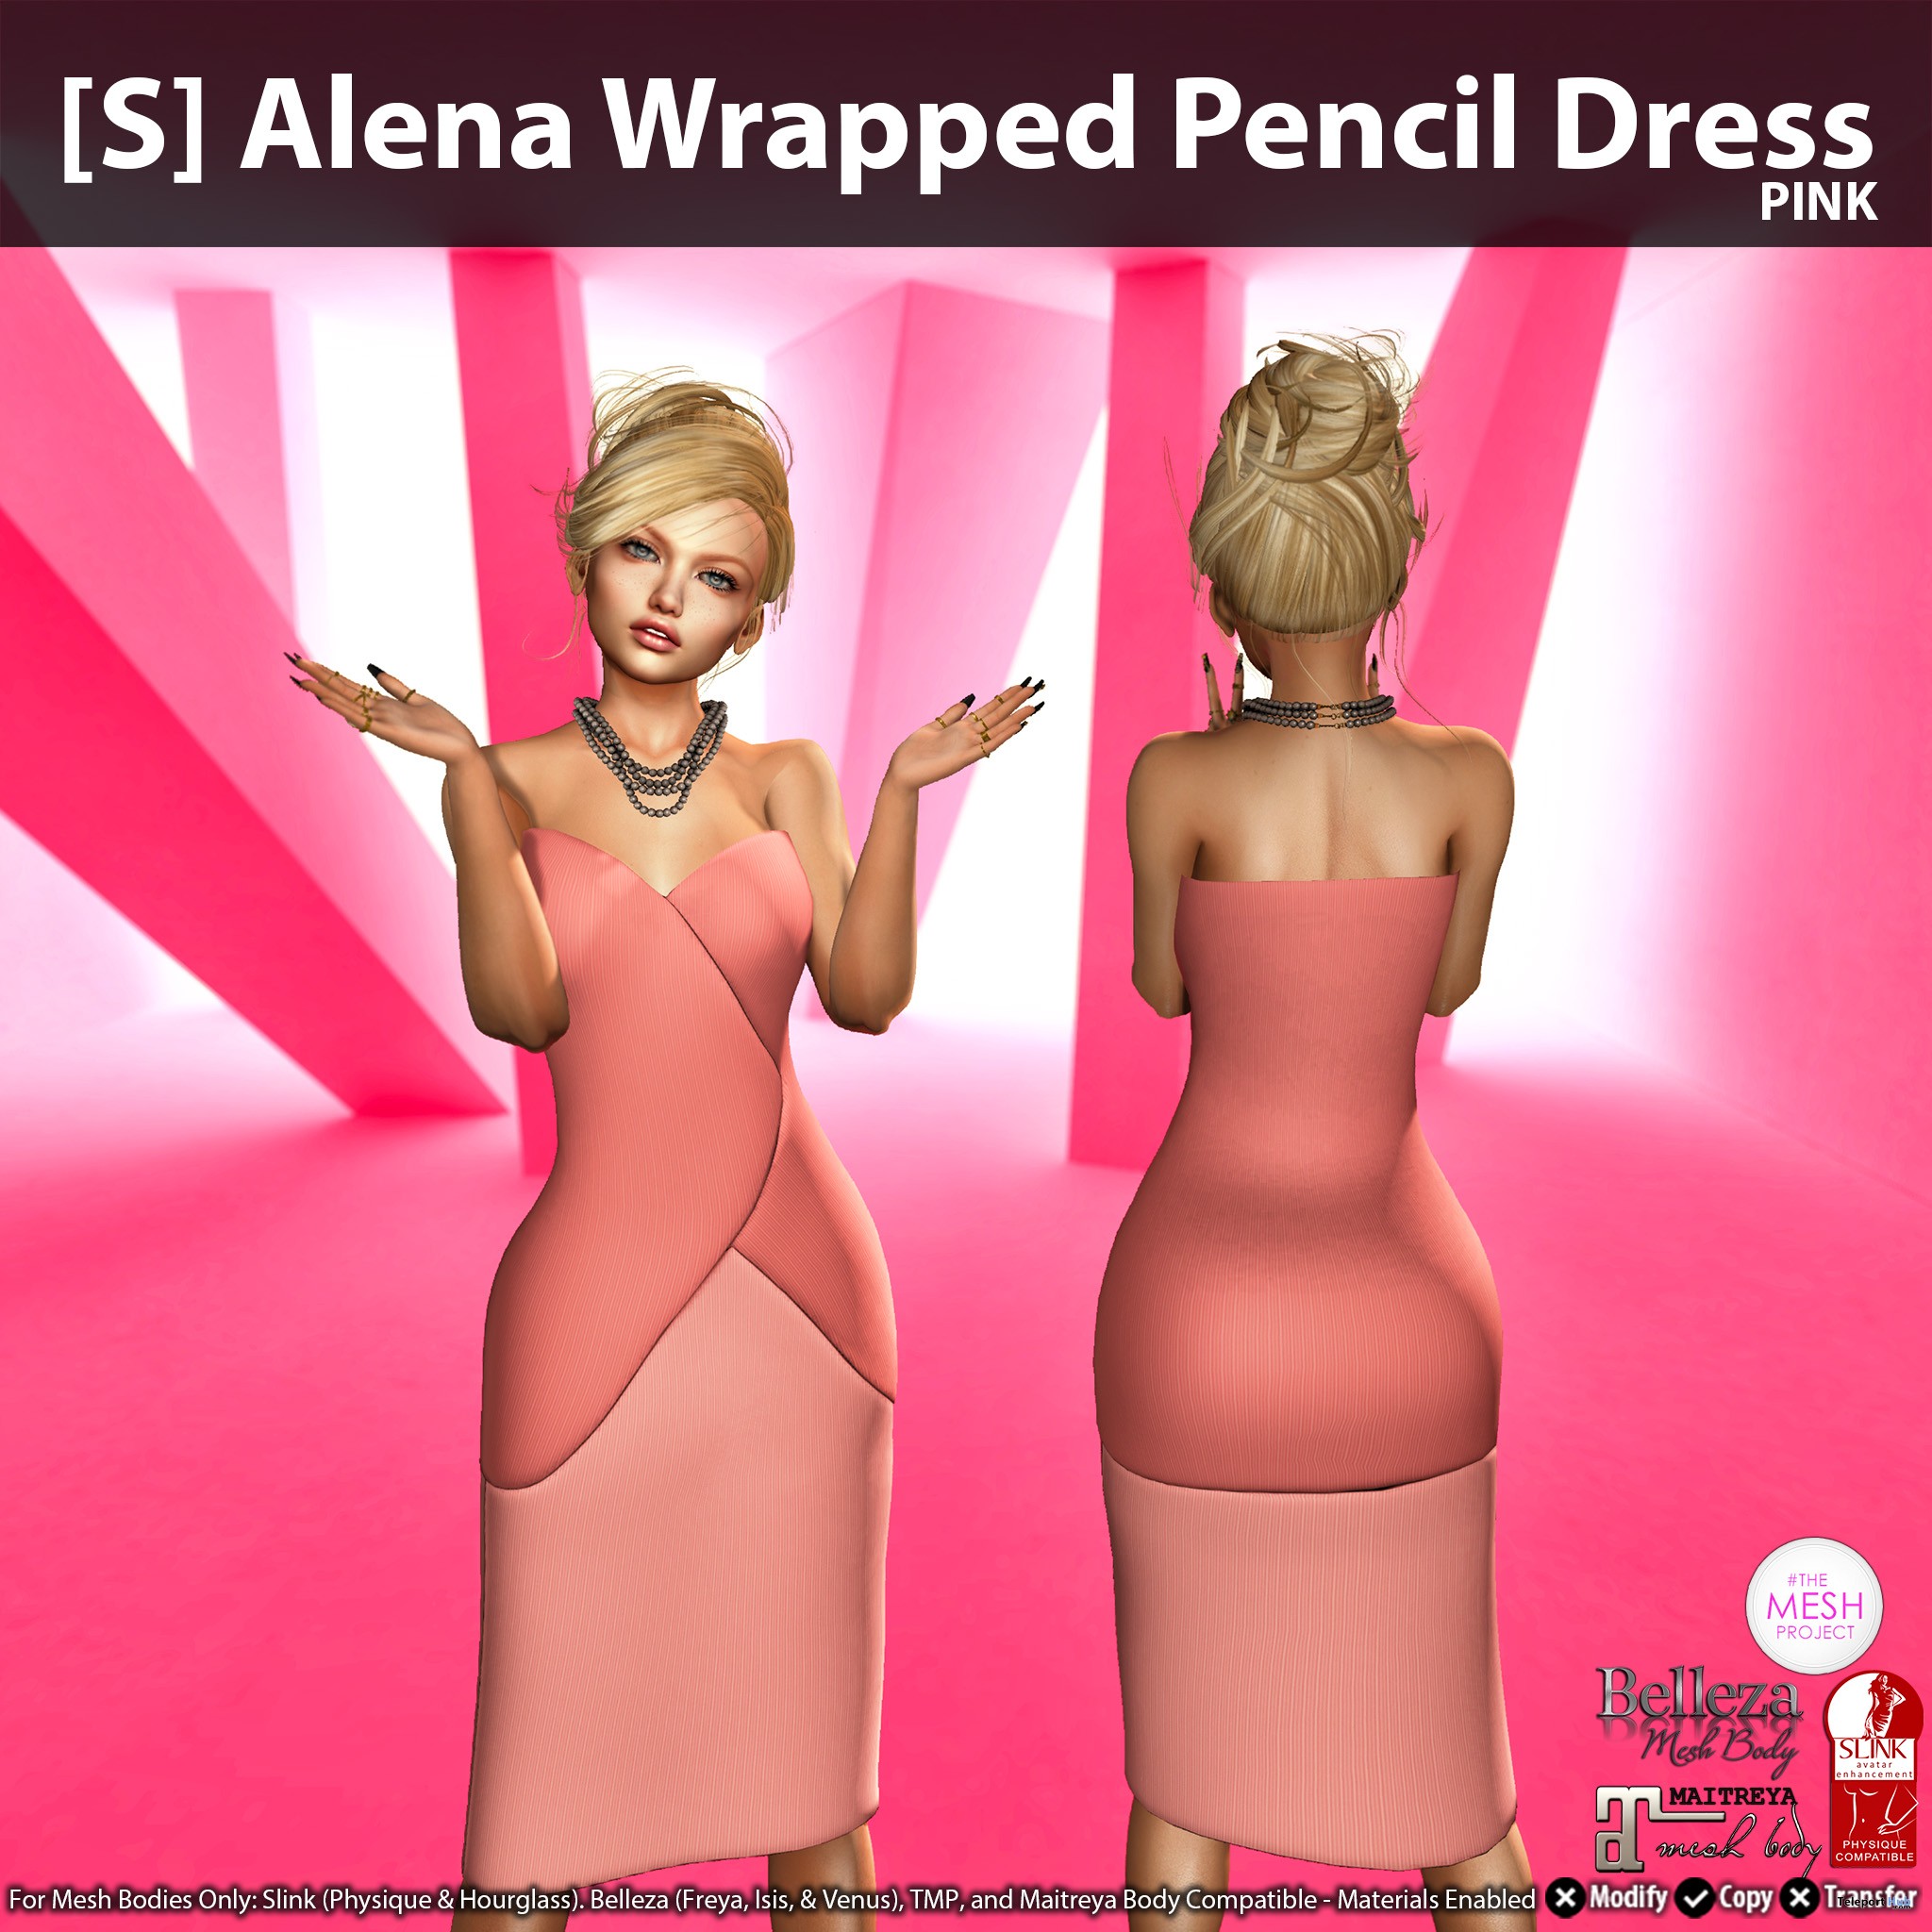 New Release: [S] Alena Wrapped Pencil Dress by [satus Inc] - Teleport Hub - teleporthub.com